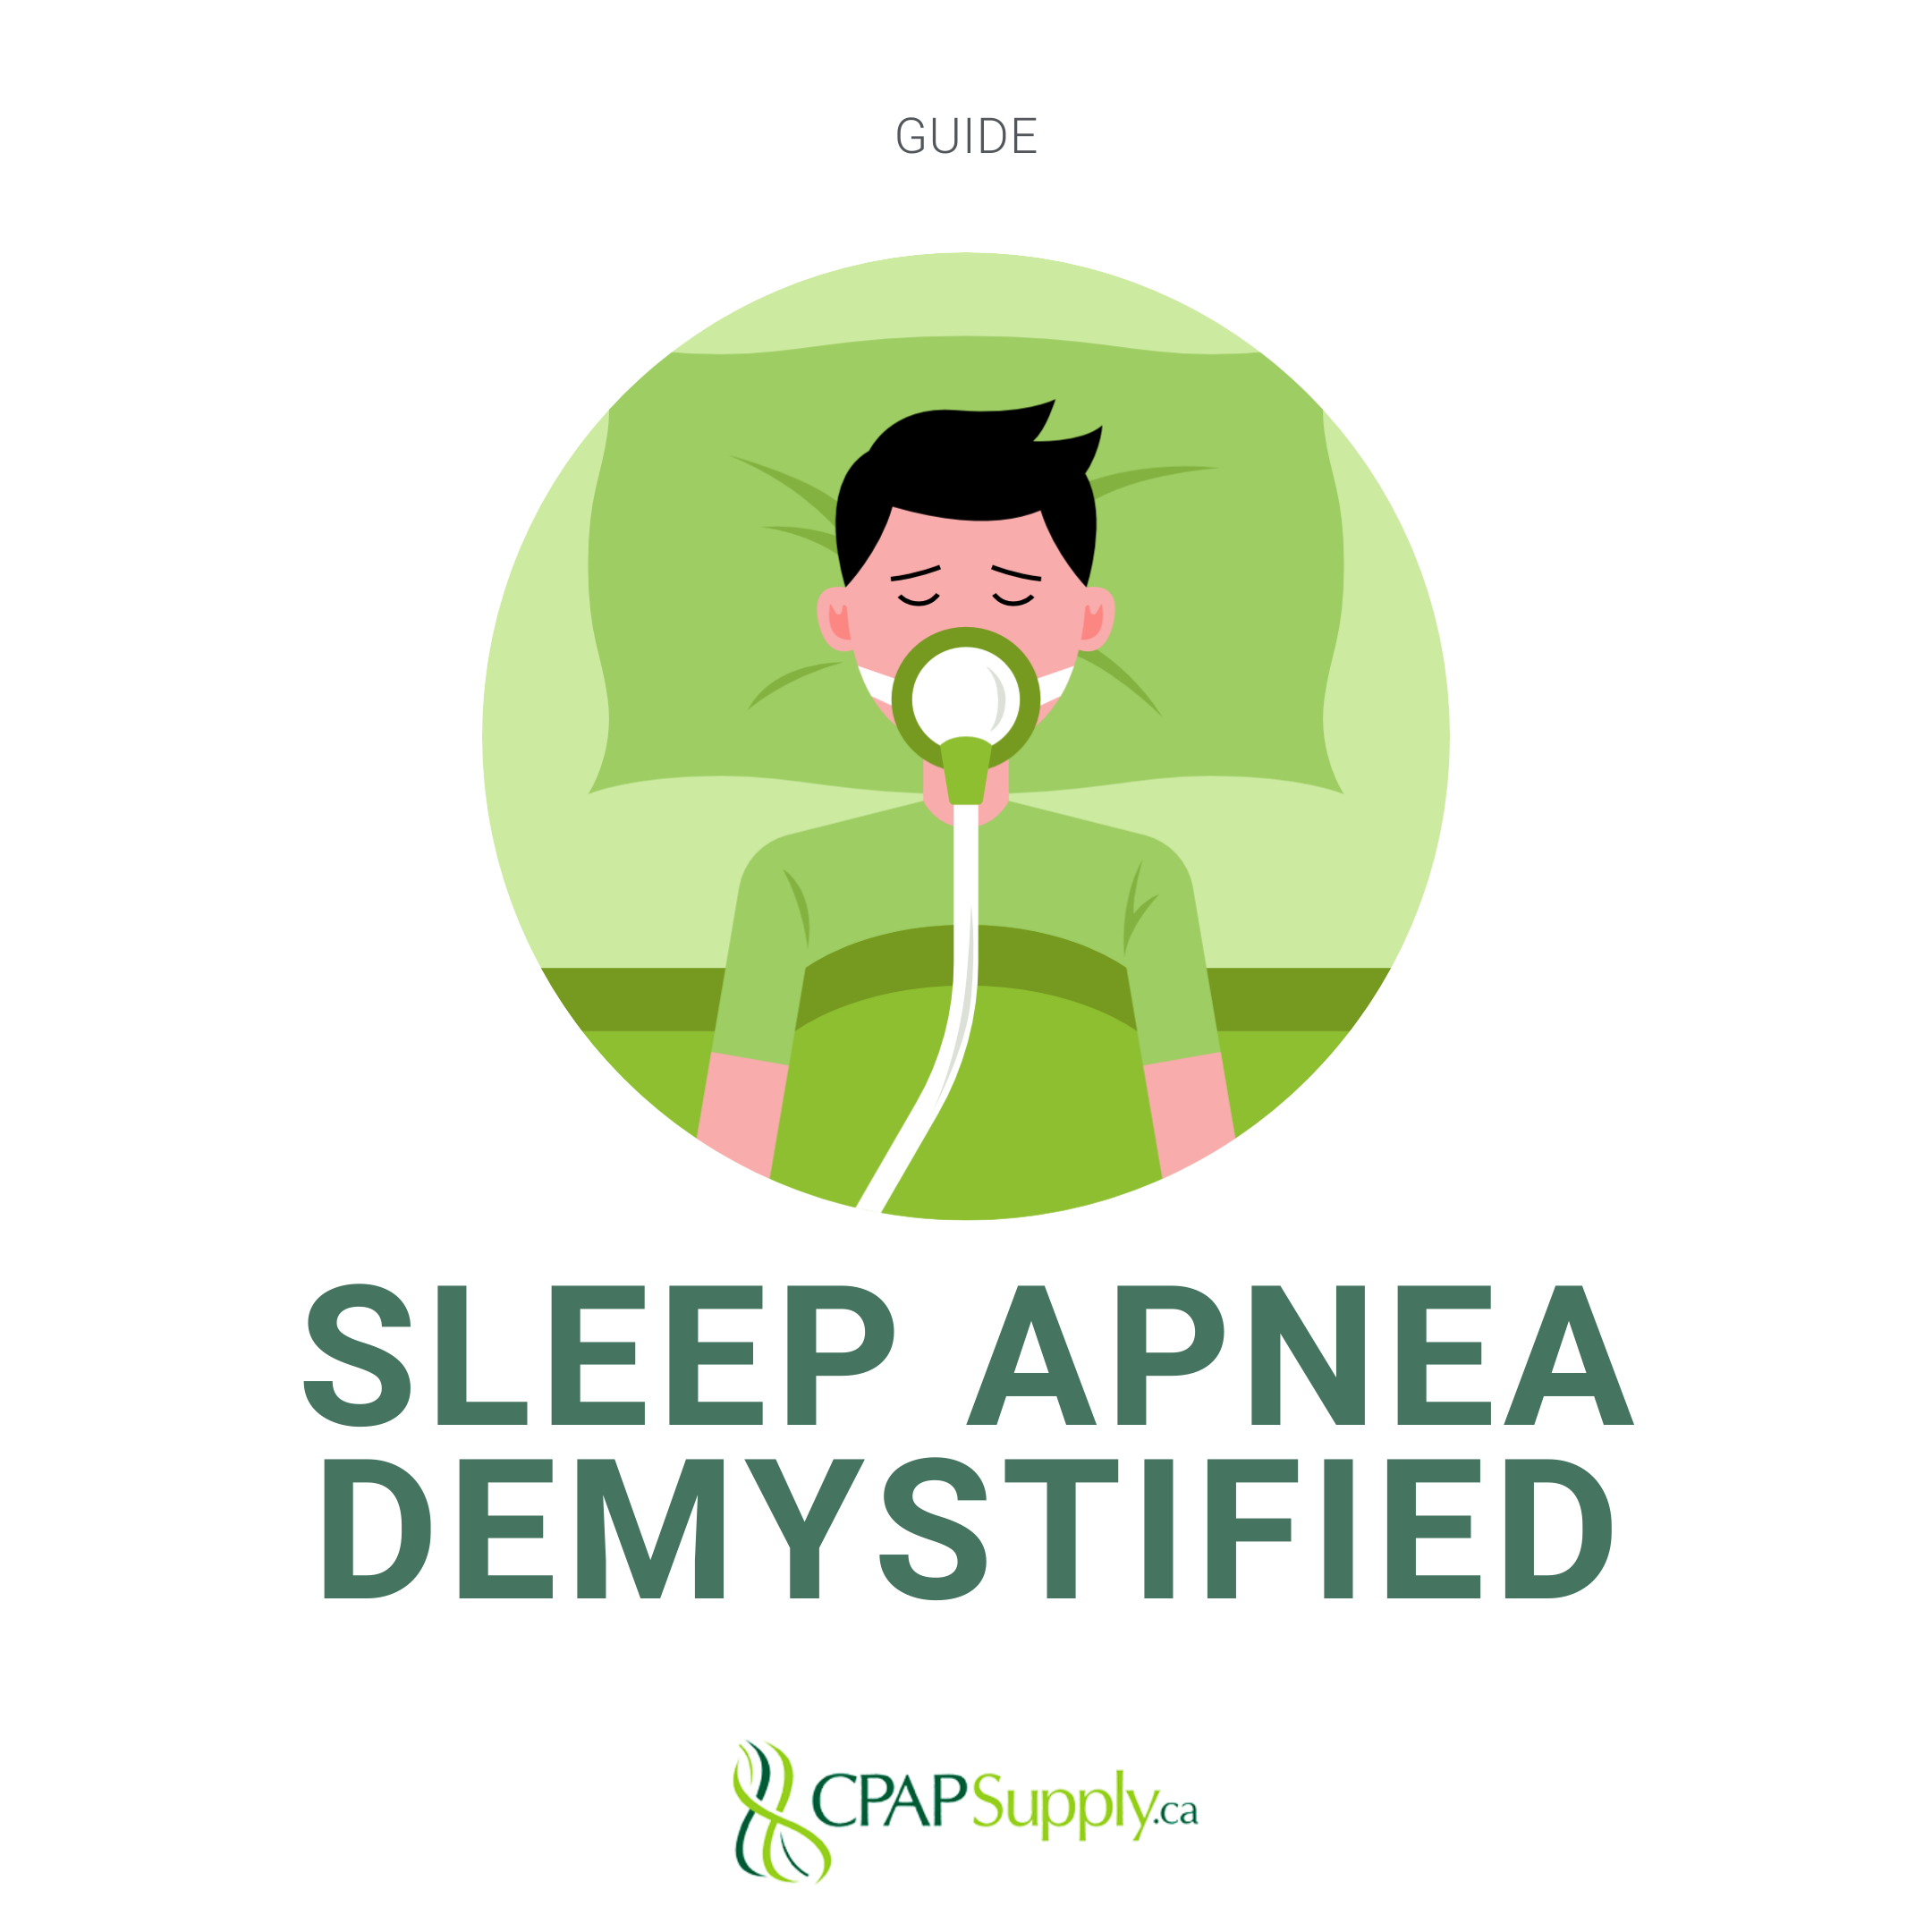 Demystifying sleep apnea.